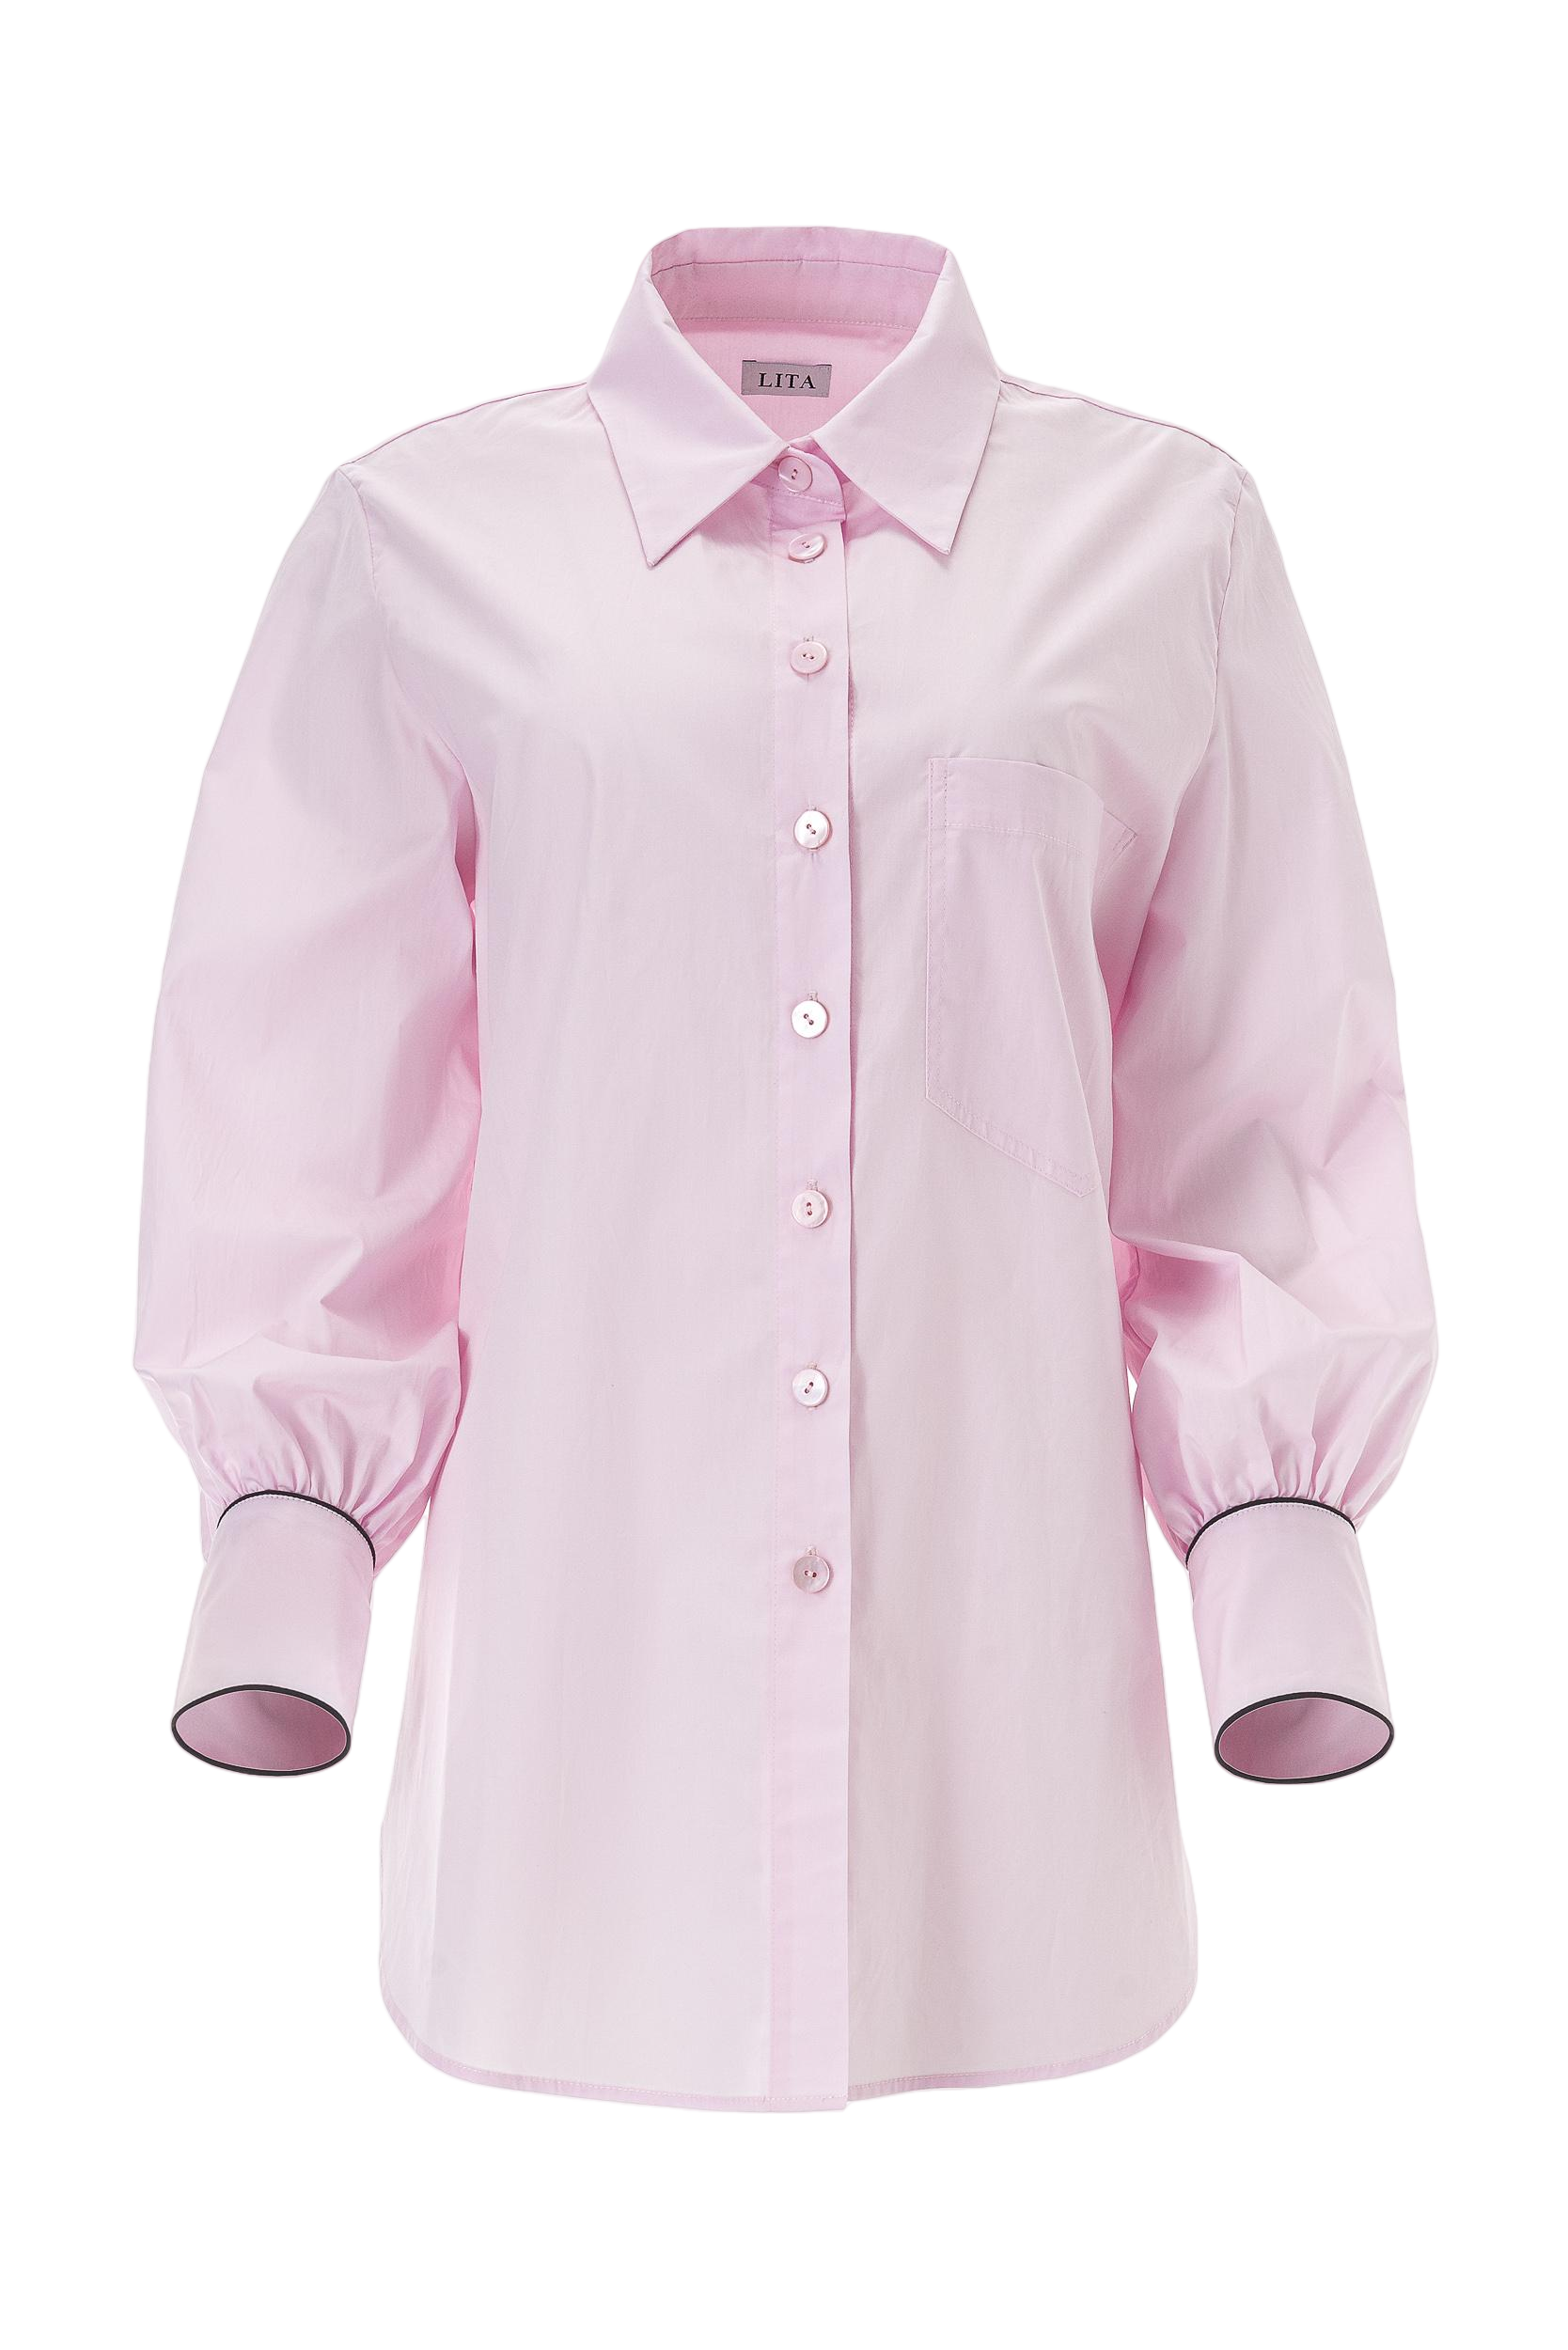 Lita Couture Bishop Sleeve Top In Pink